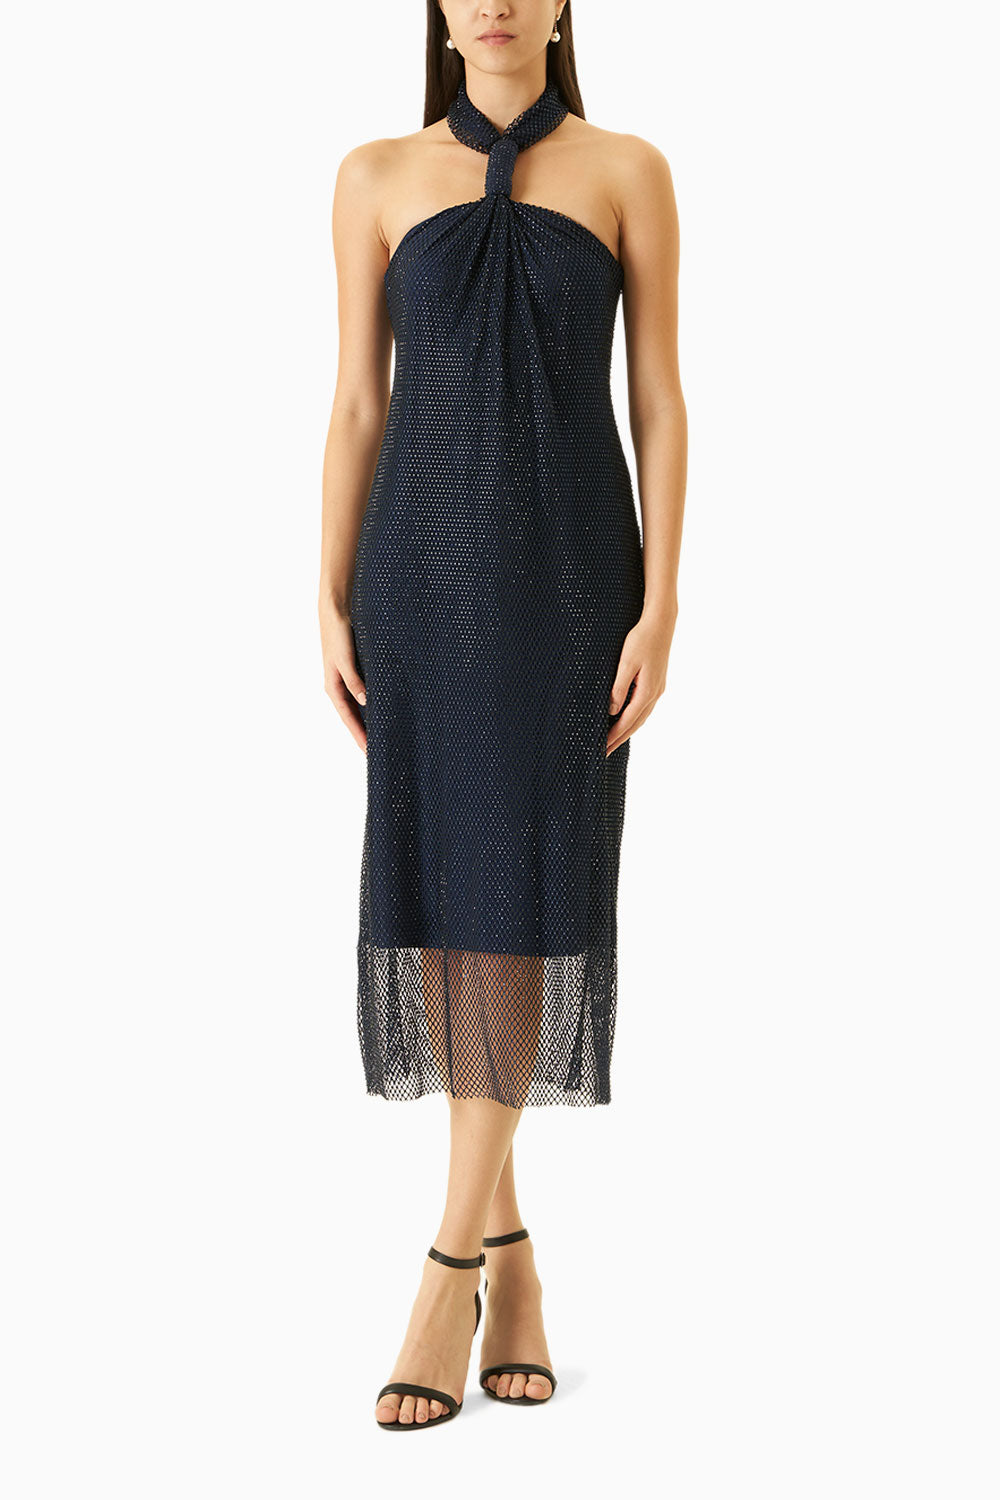 Midnight Blue Swarovski Net-Layered Dress